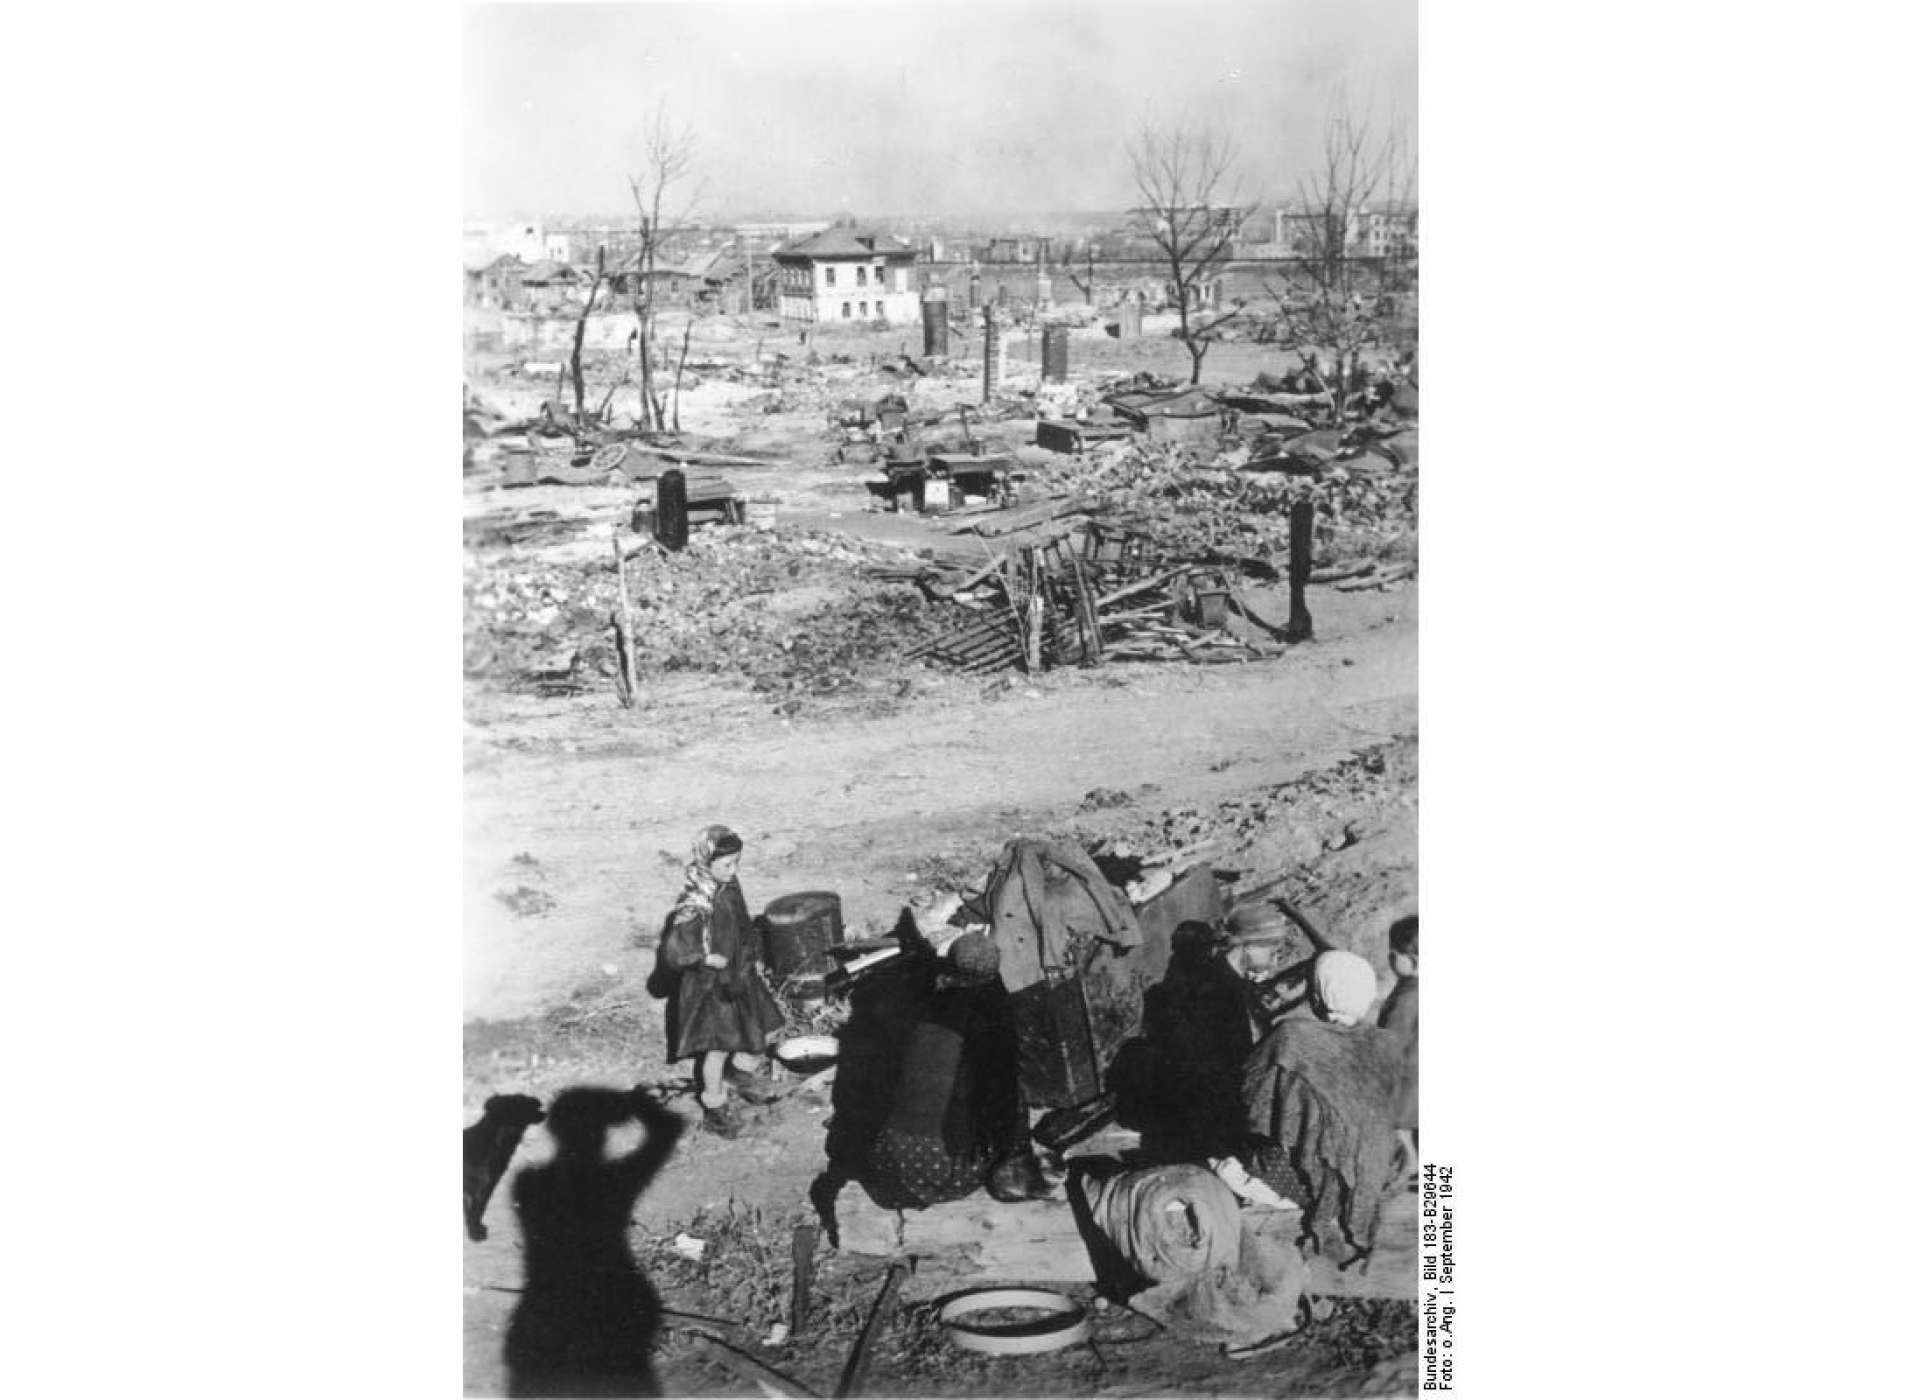 Stalingrad residents, 1942. Source: Bundesarchiv/Public Domain